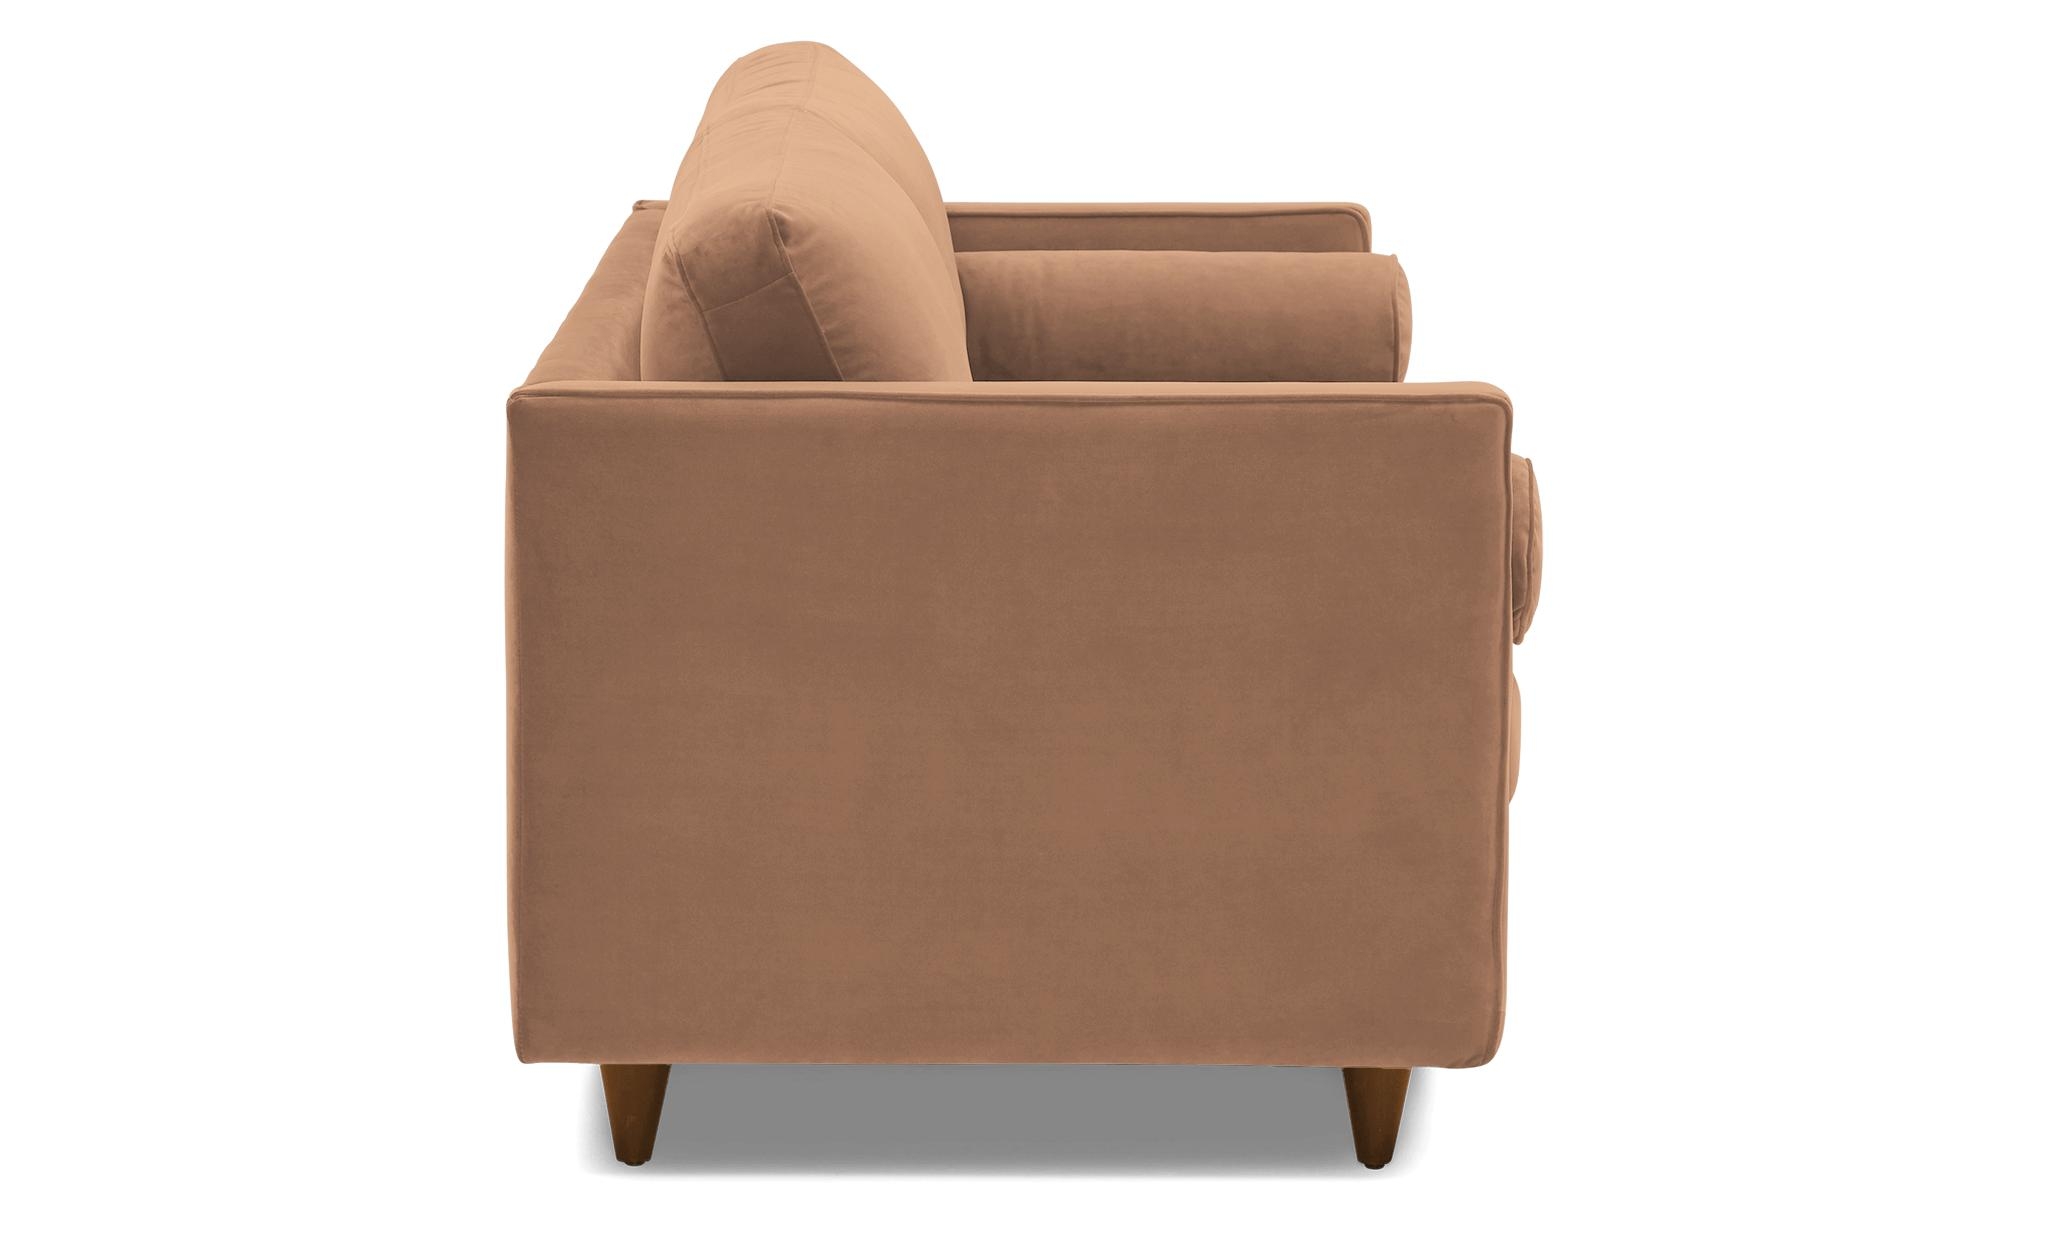 Pink Briar Mid Century Modern Sleeper Sofa - Royale Blush - Mocha - Image 2